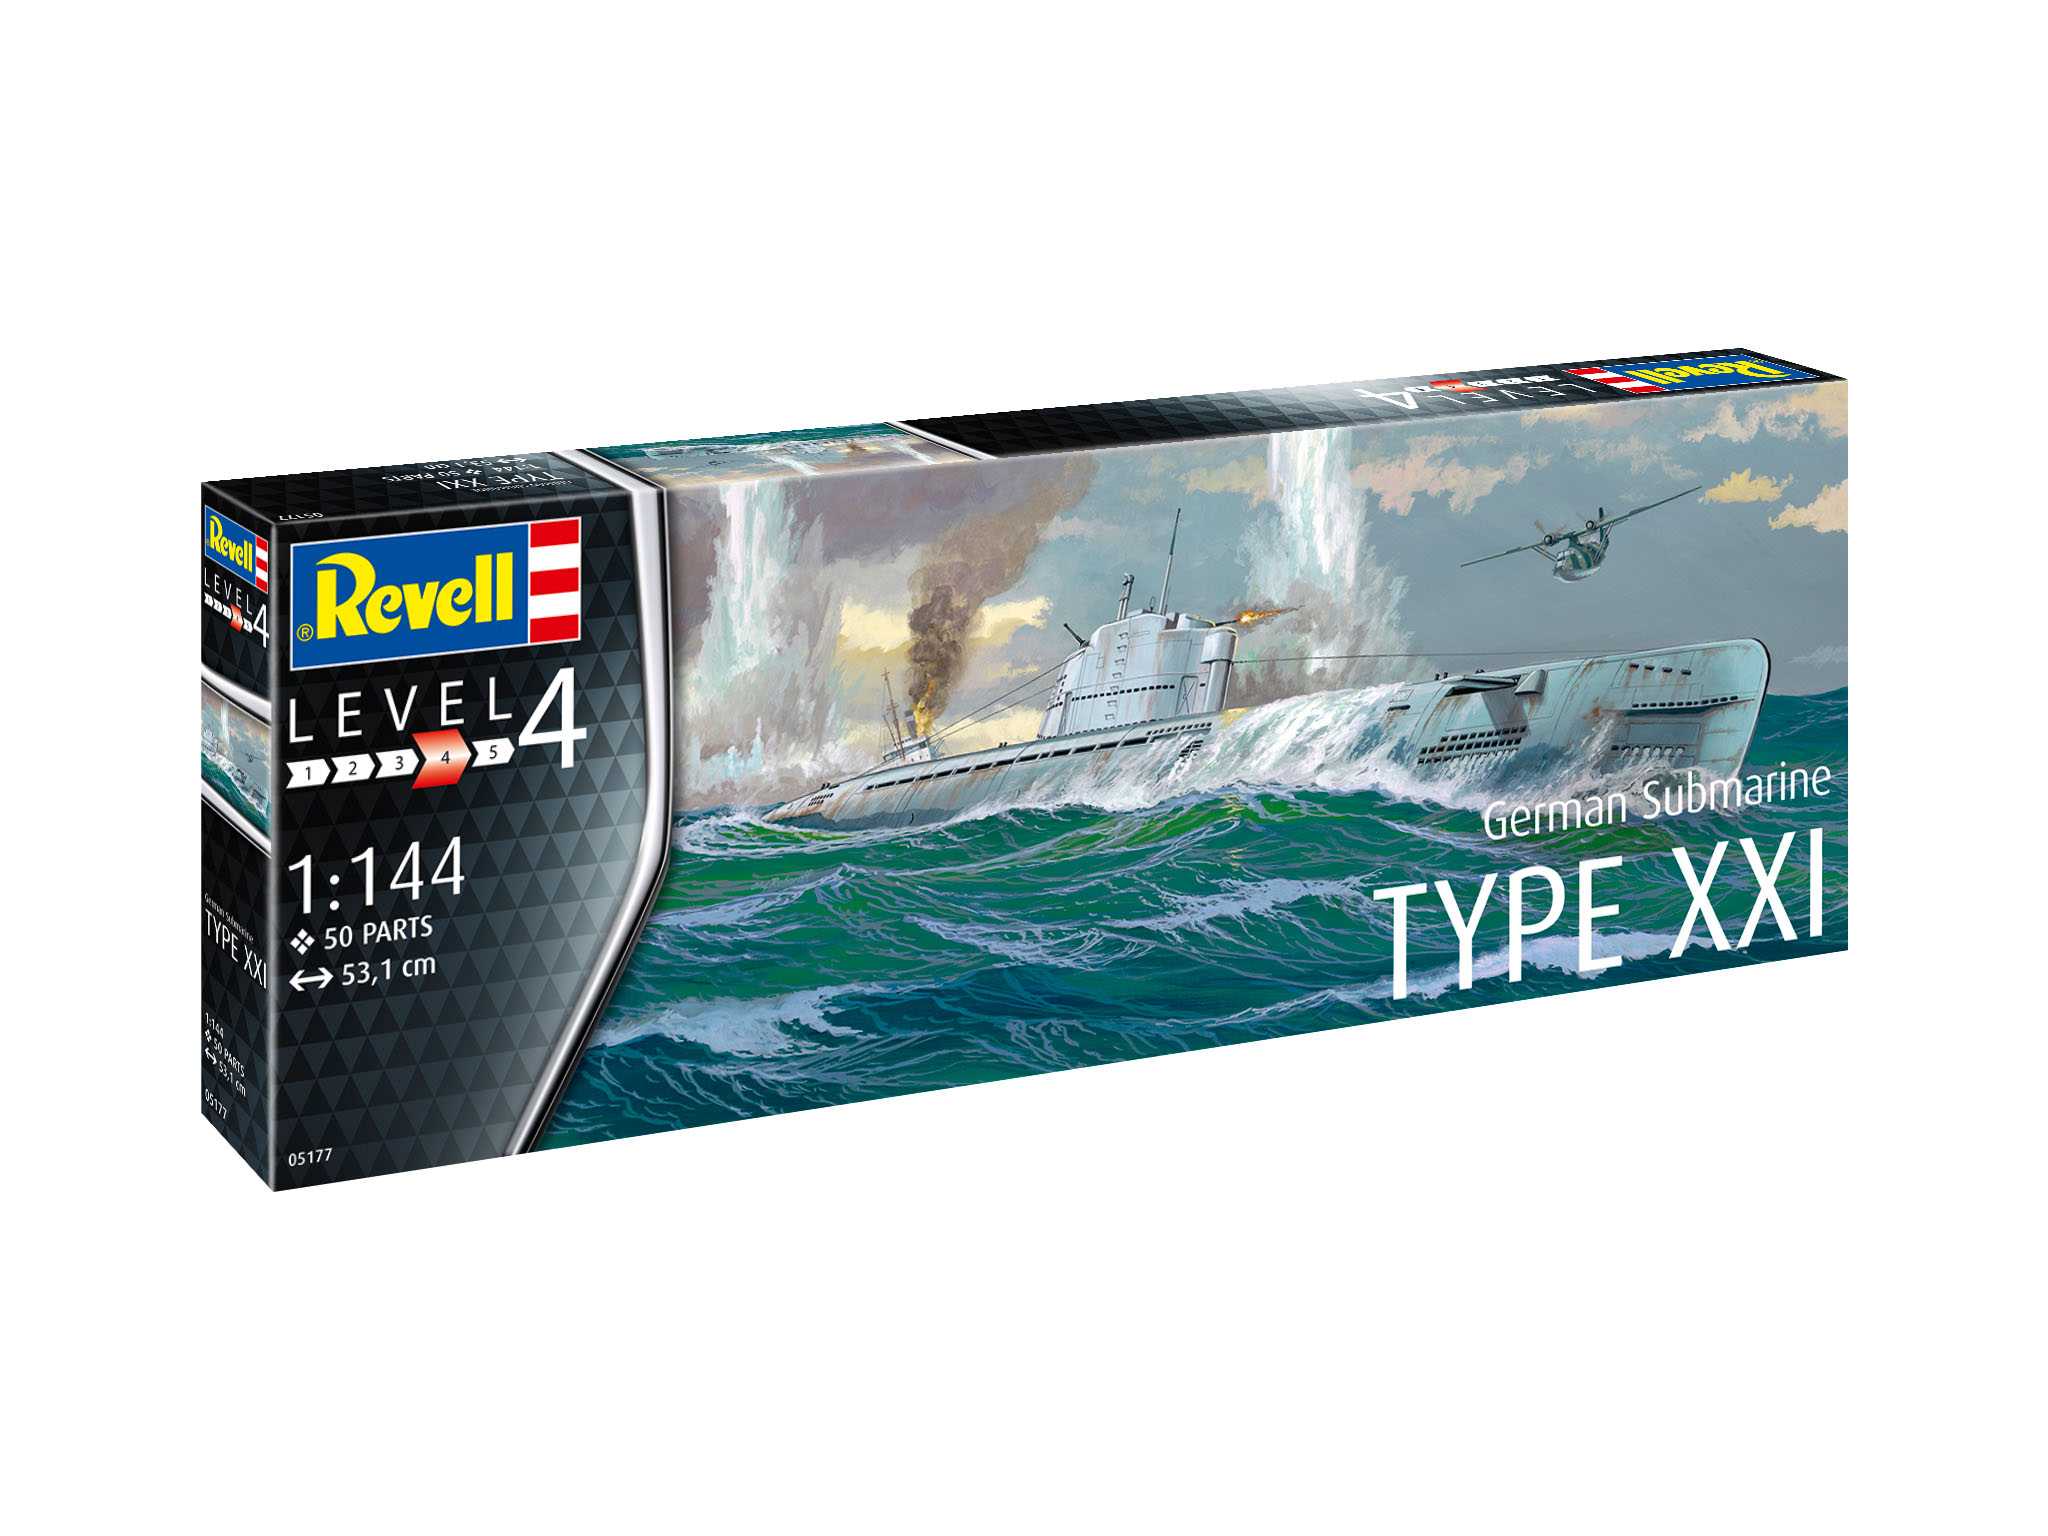 Revell Plastic ModelKit ponorka 05177 - German Submarine Typ XXI (1:144)